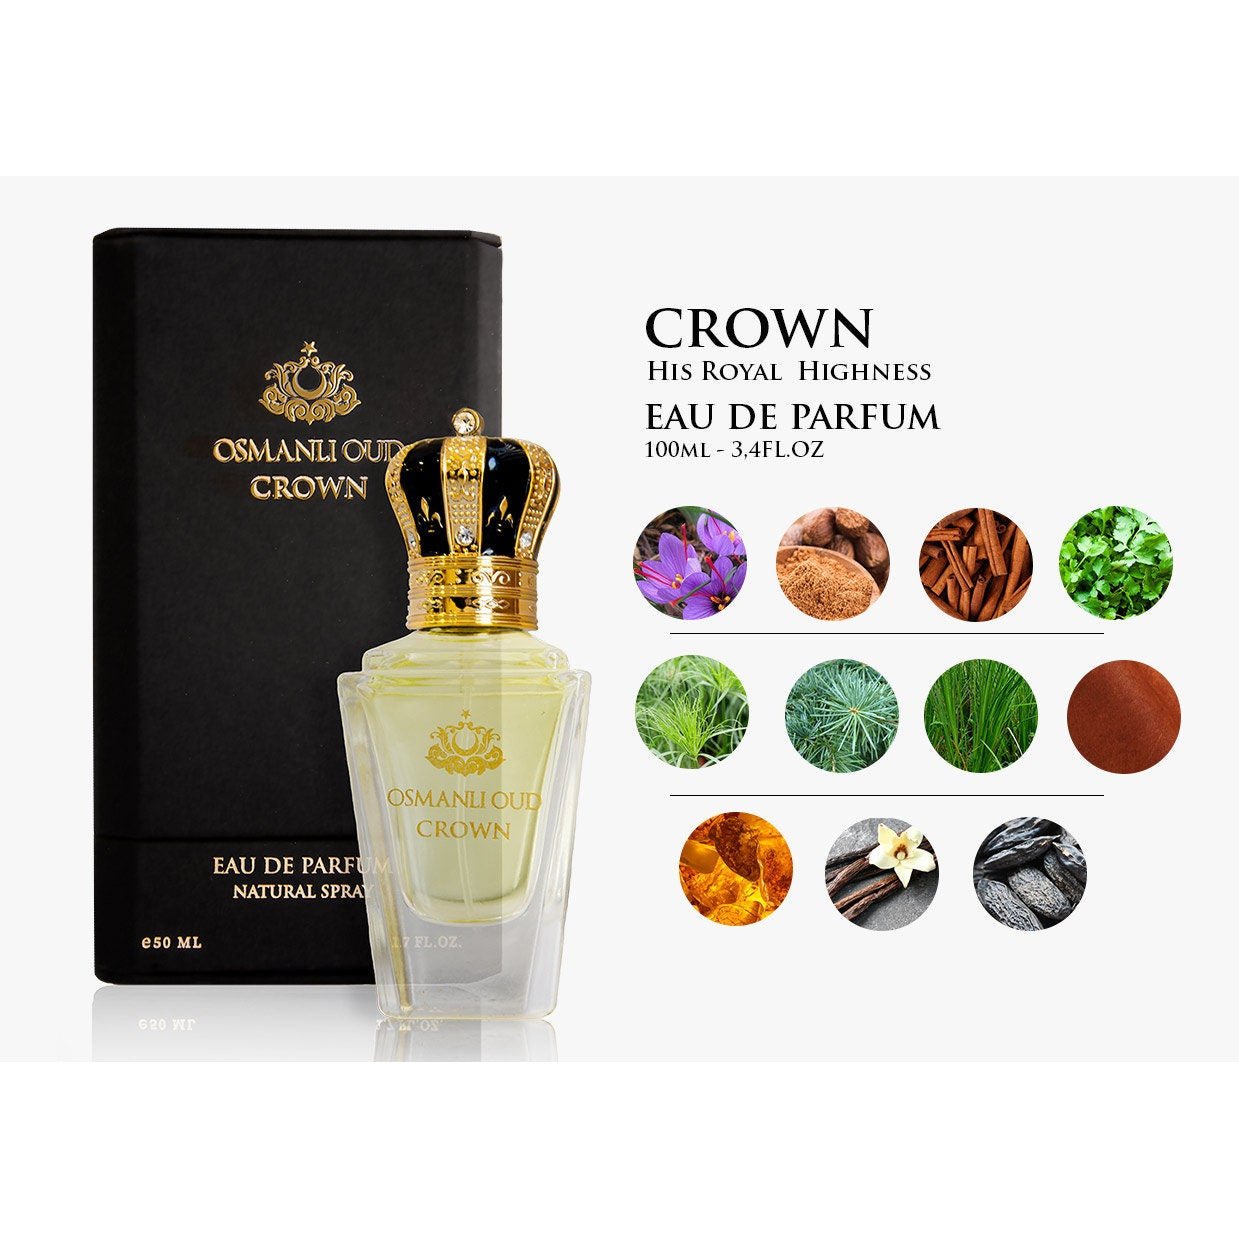 Ottoman Oud Majestic Crown Edp 50 ml Women - Men Perfume - Turkish TV Series